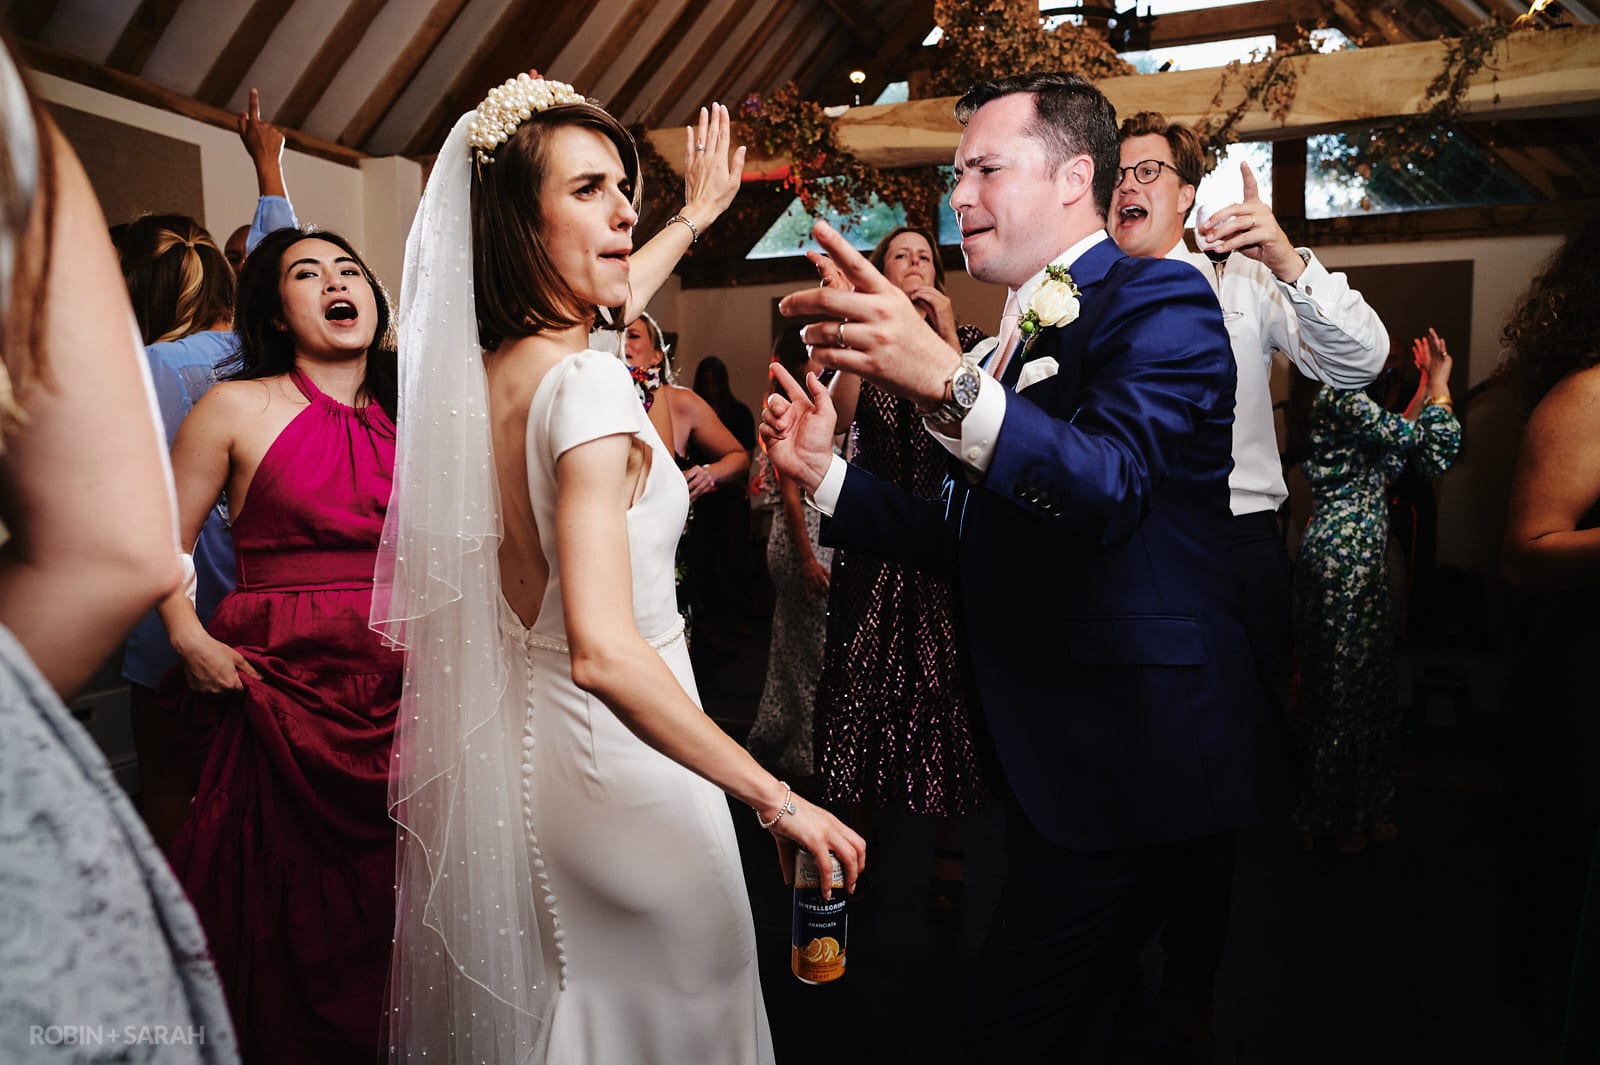 Bride, groom and guests dancing at Wethele Manor wedding.